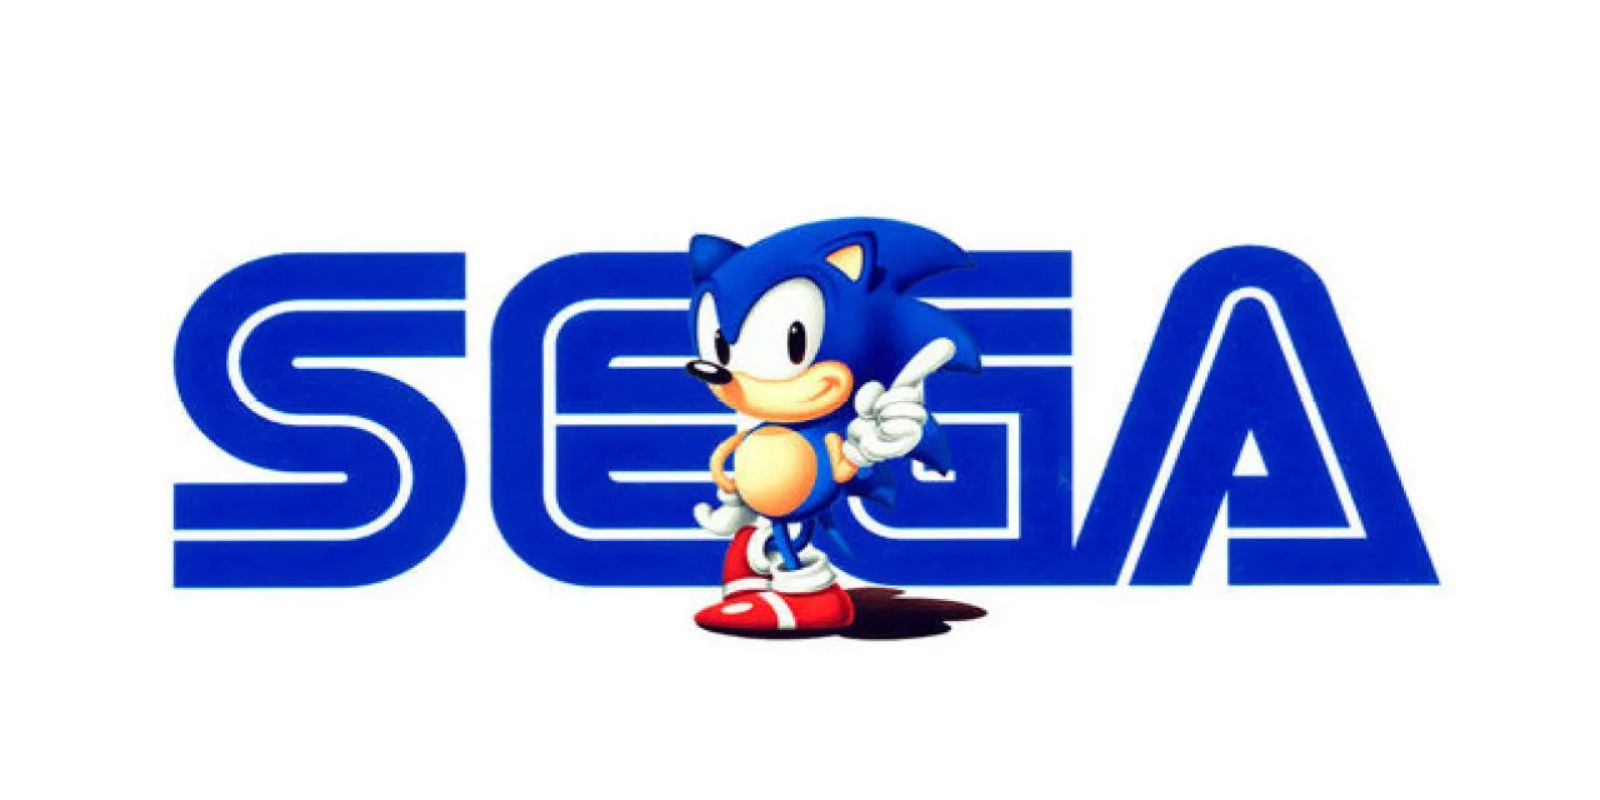 Image of Sonic over Sega logo